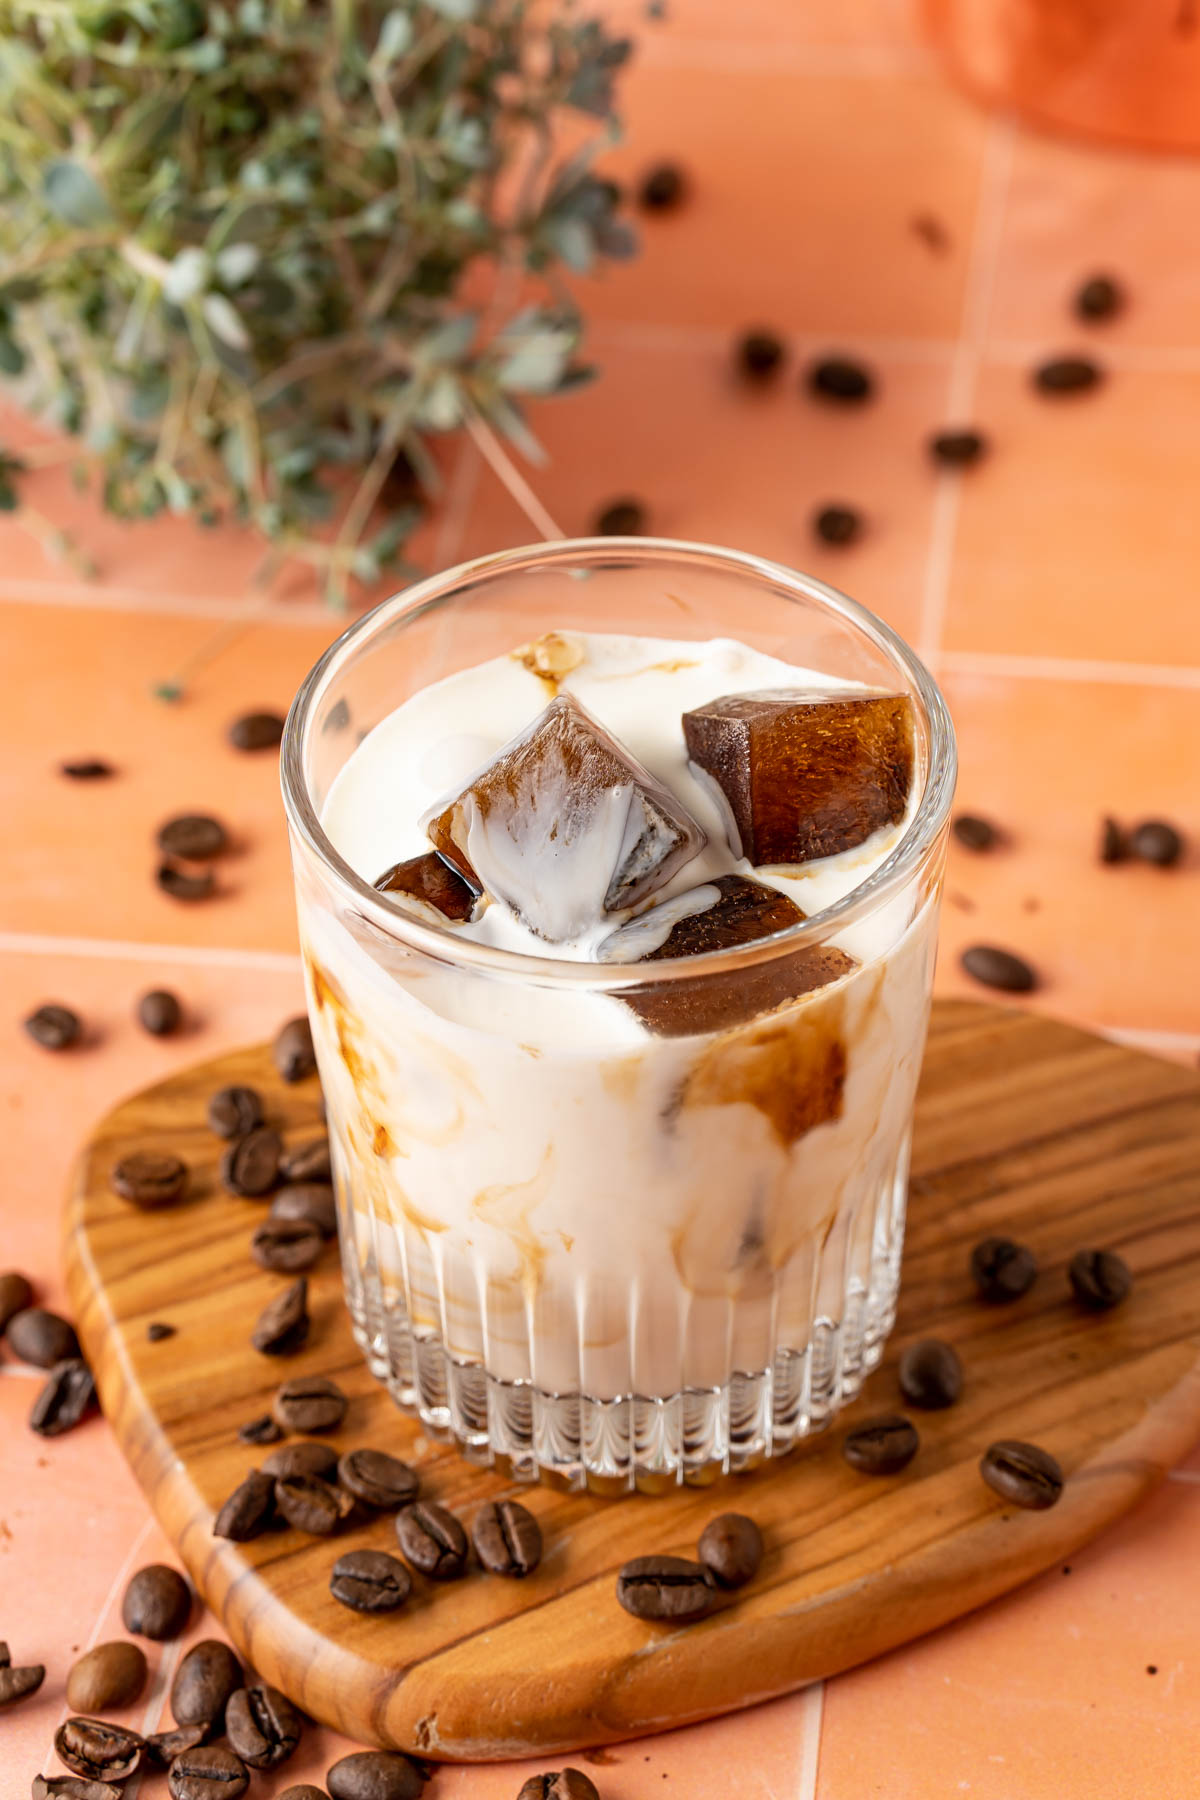 Coffee & Milk Ice Cubes - thesassylife